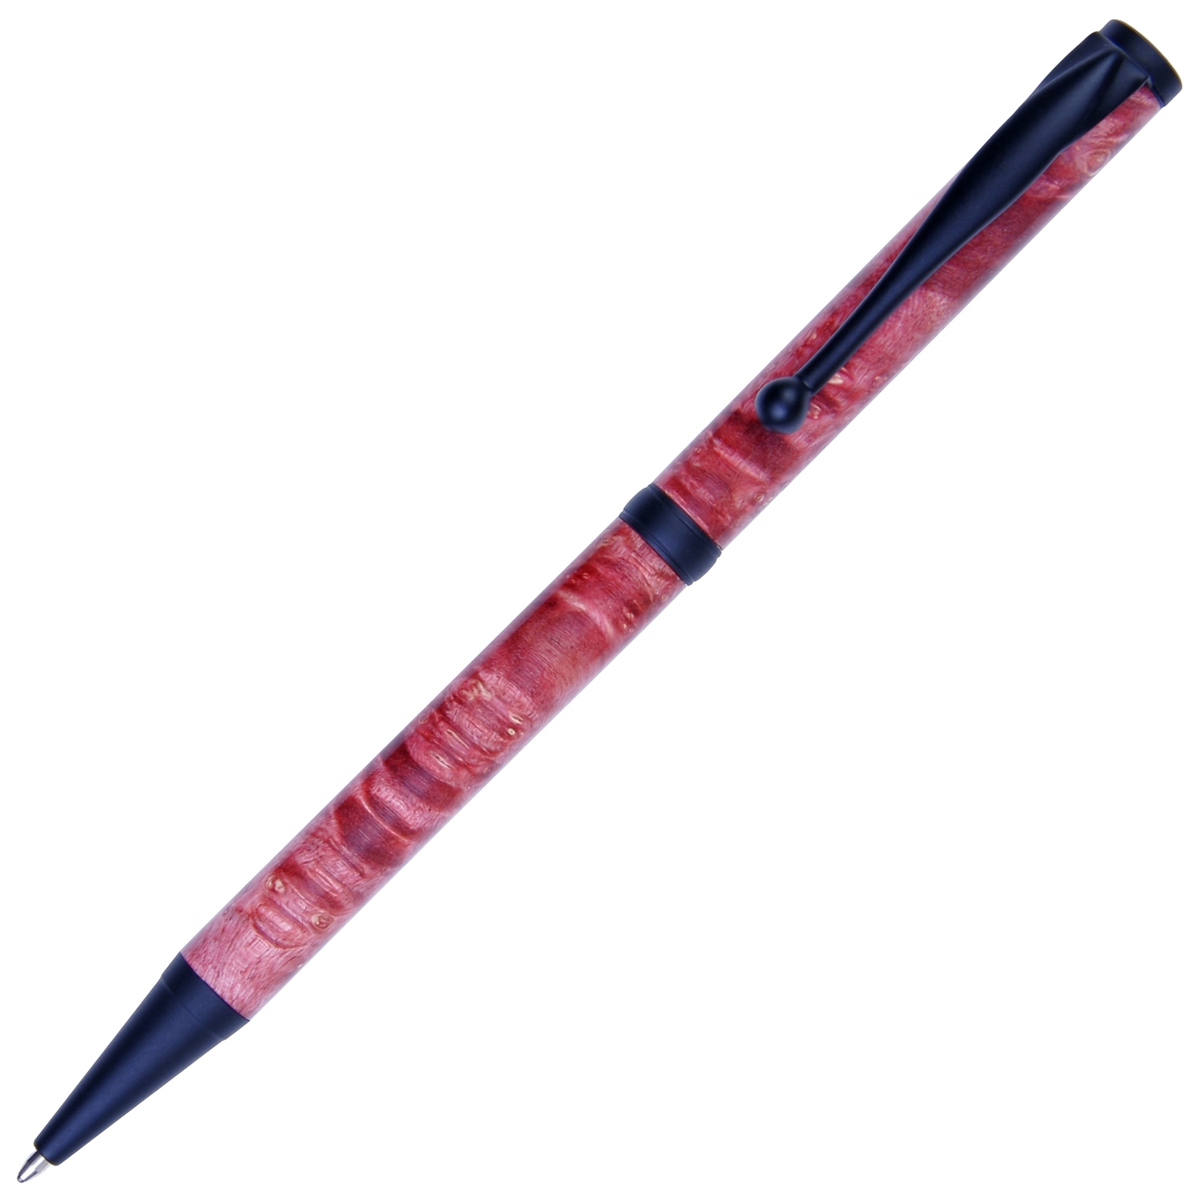 Slimline Twist Pen - Red Maple Burl